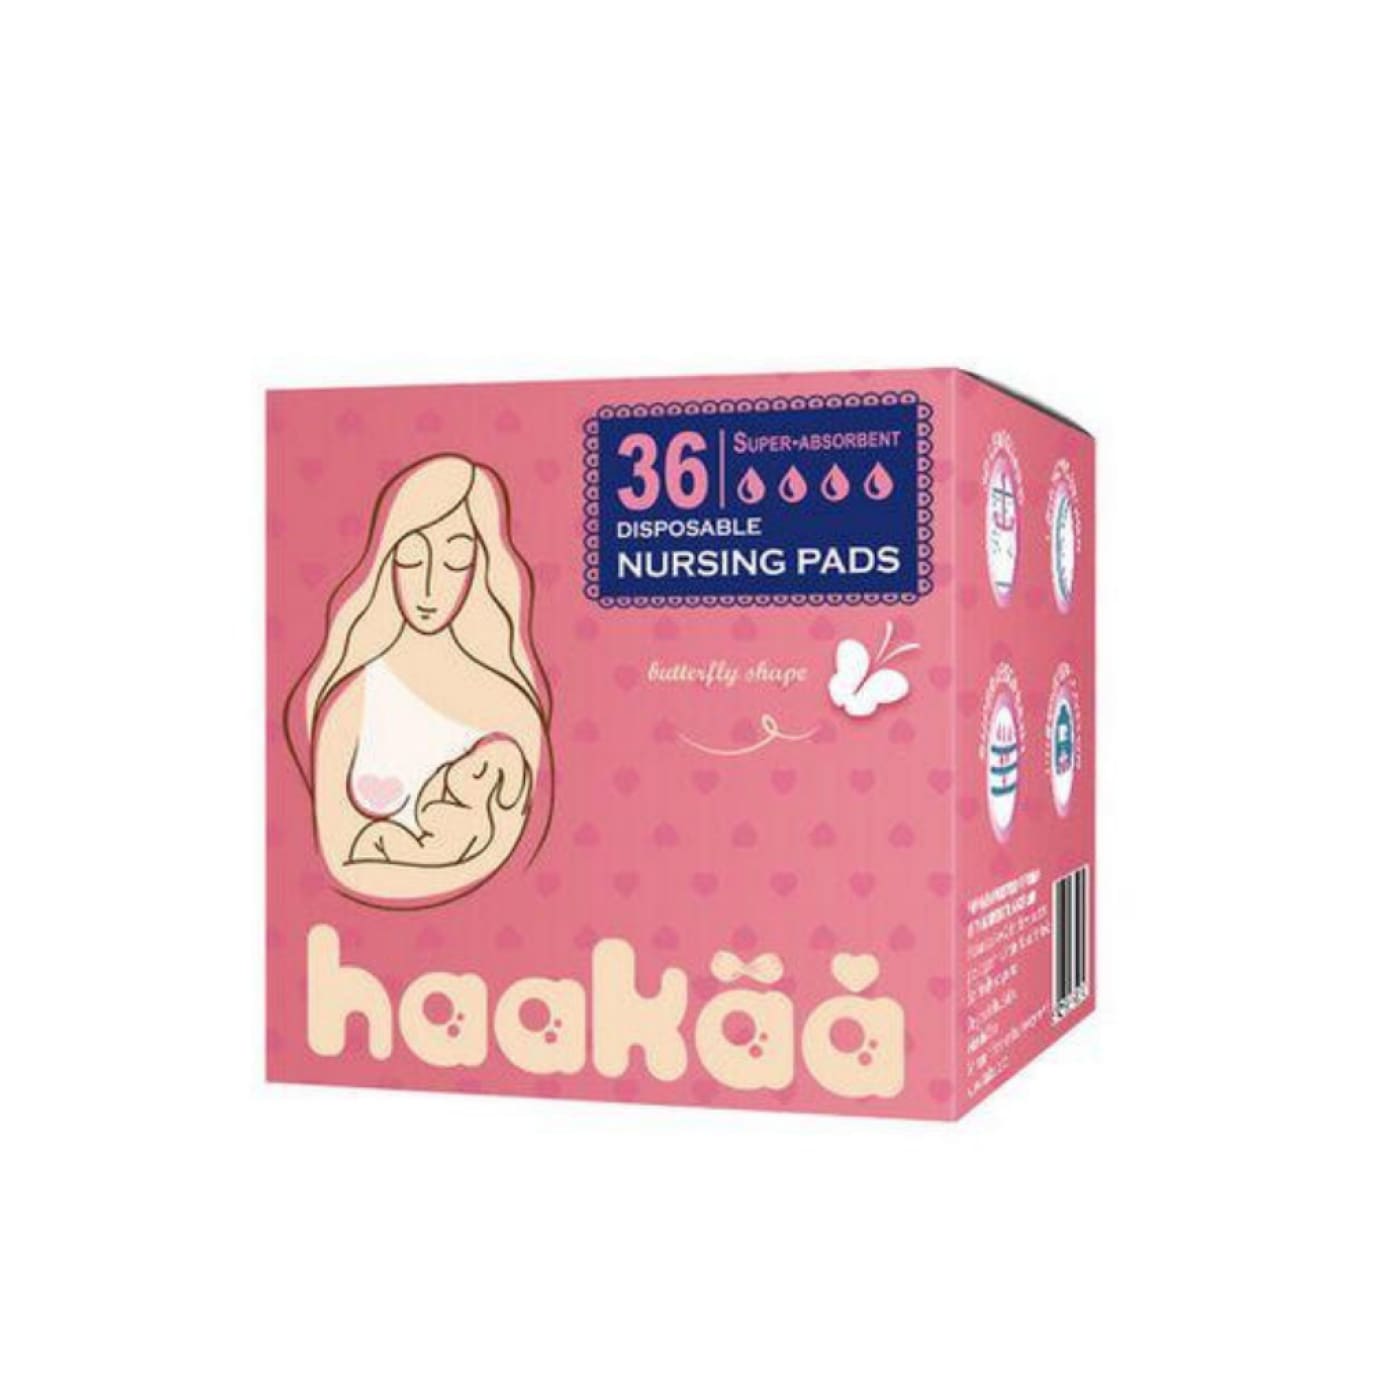 Haakaa Disposable Nursing Pads 36PK - NURSING & FEEDING - BREAST FEEDING AIDS/STORAGE